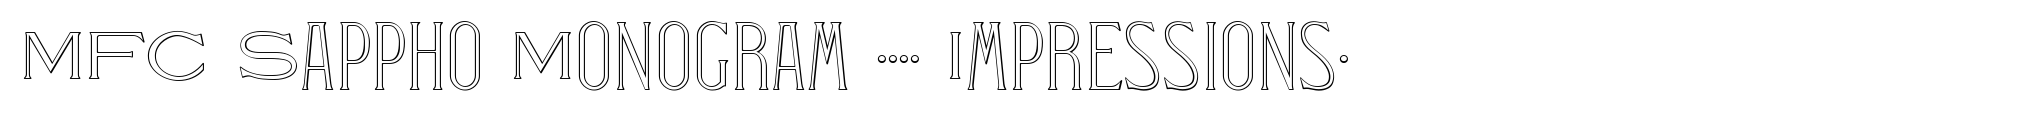 MFC Sappho Monogram (250 Impressions) image